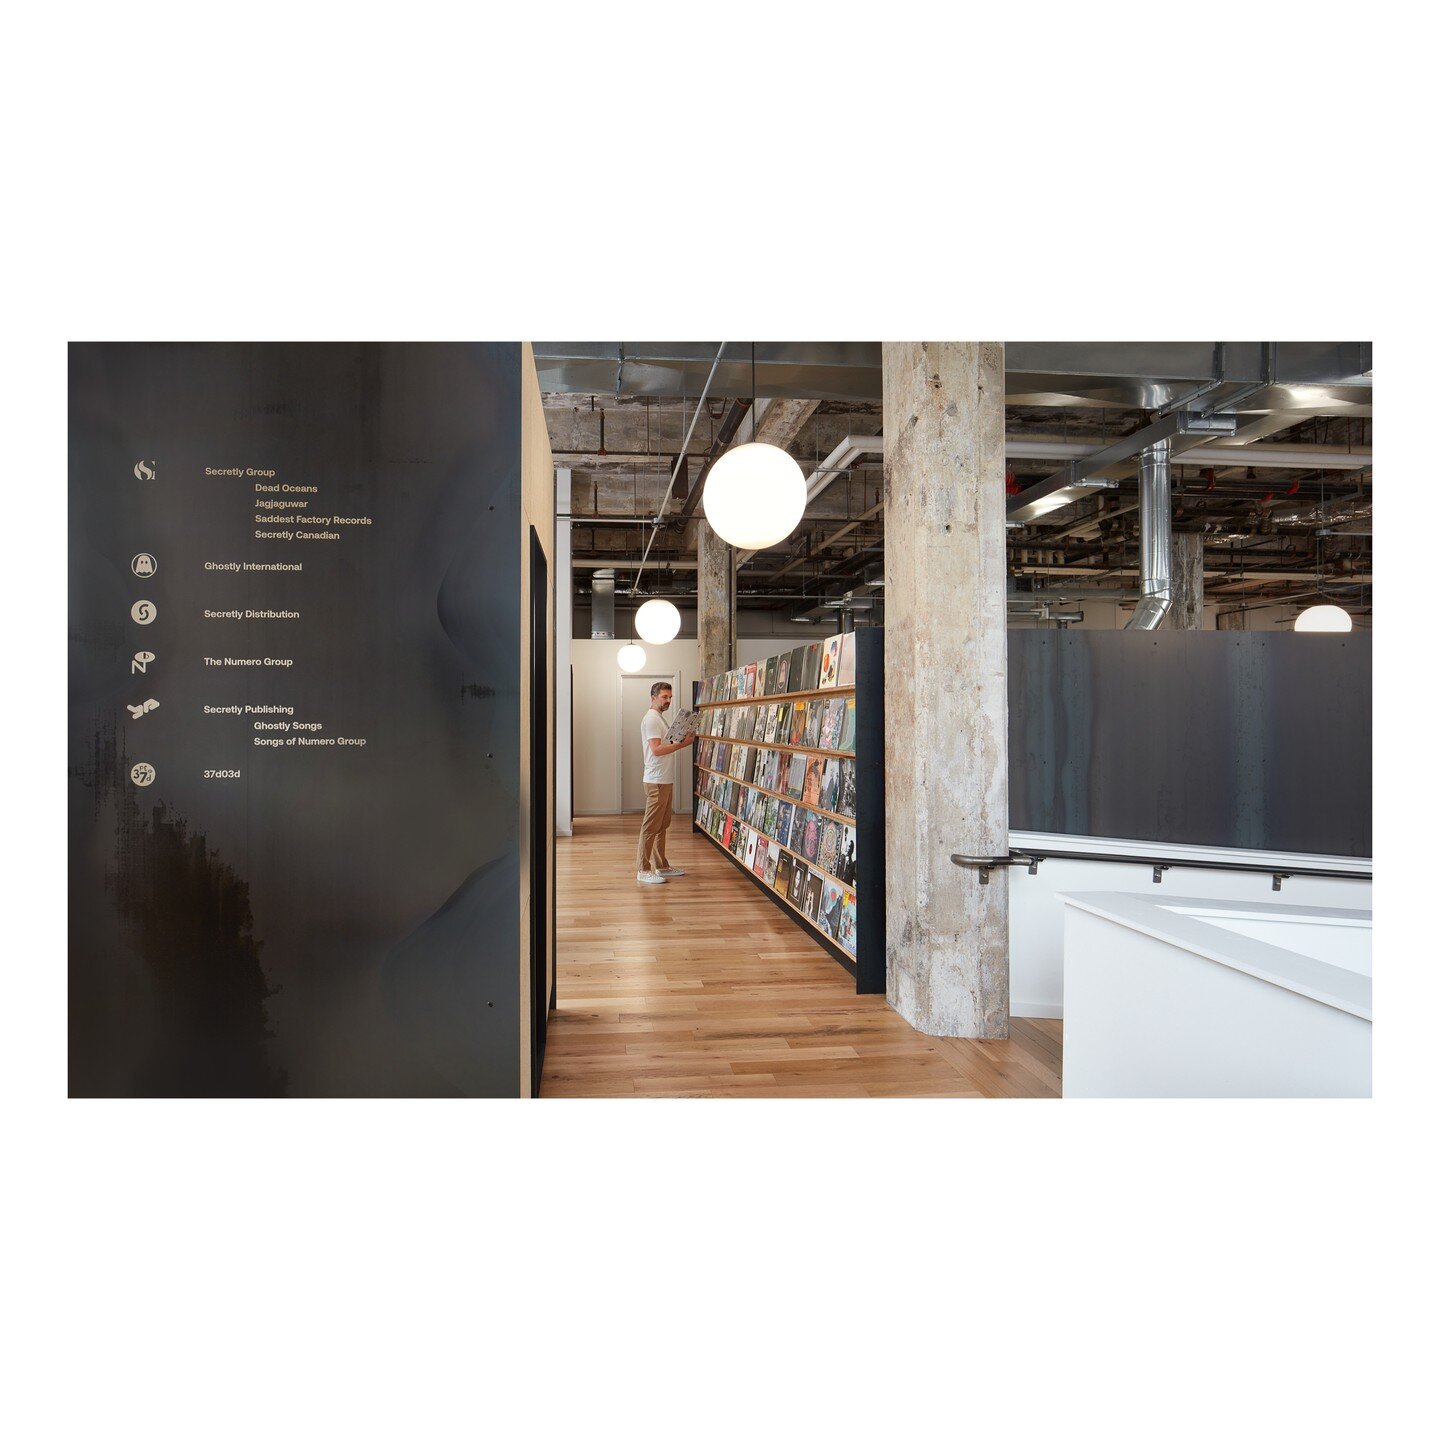 Entry and vinyl library of @secretlygroup artists at their new Williamsburg office. 📷: @ashoksinhaphoto. @jagjaguwar @deadoceans @secretlycanadian #officedesign #williamsburg #brooklyn #hotrolledsteel #rawconcrete #tectum